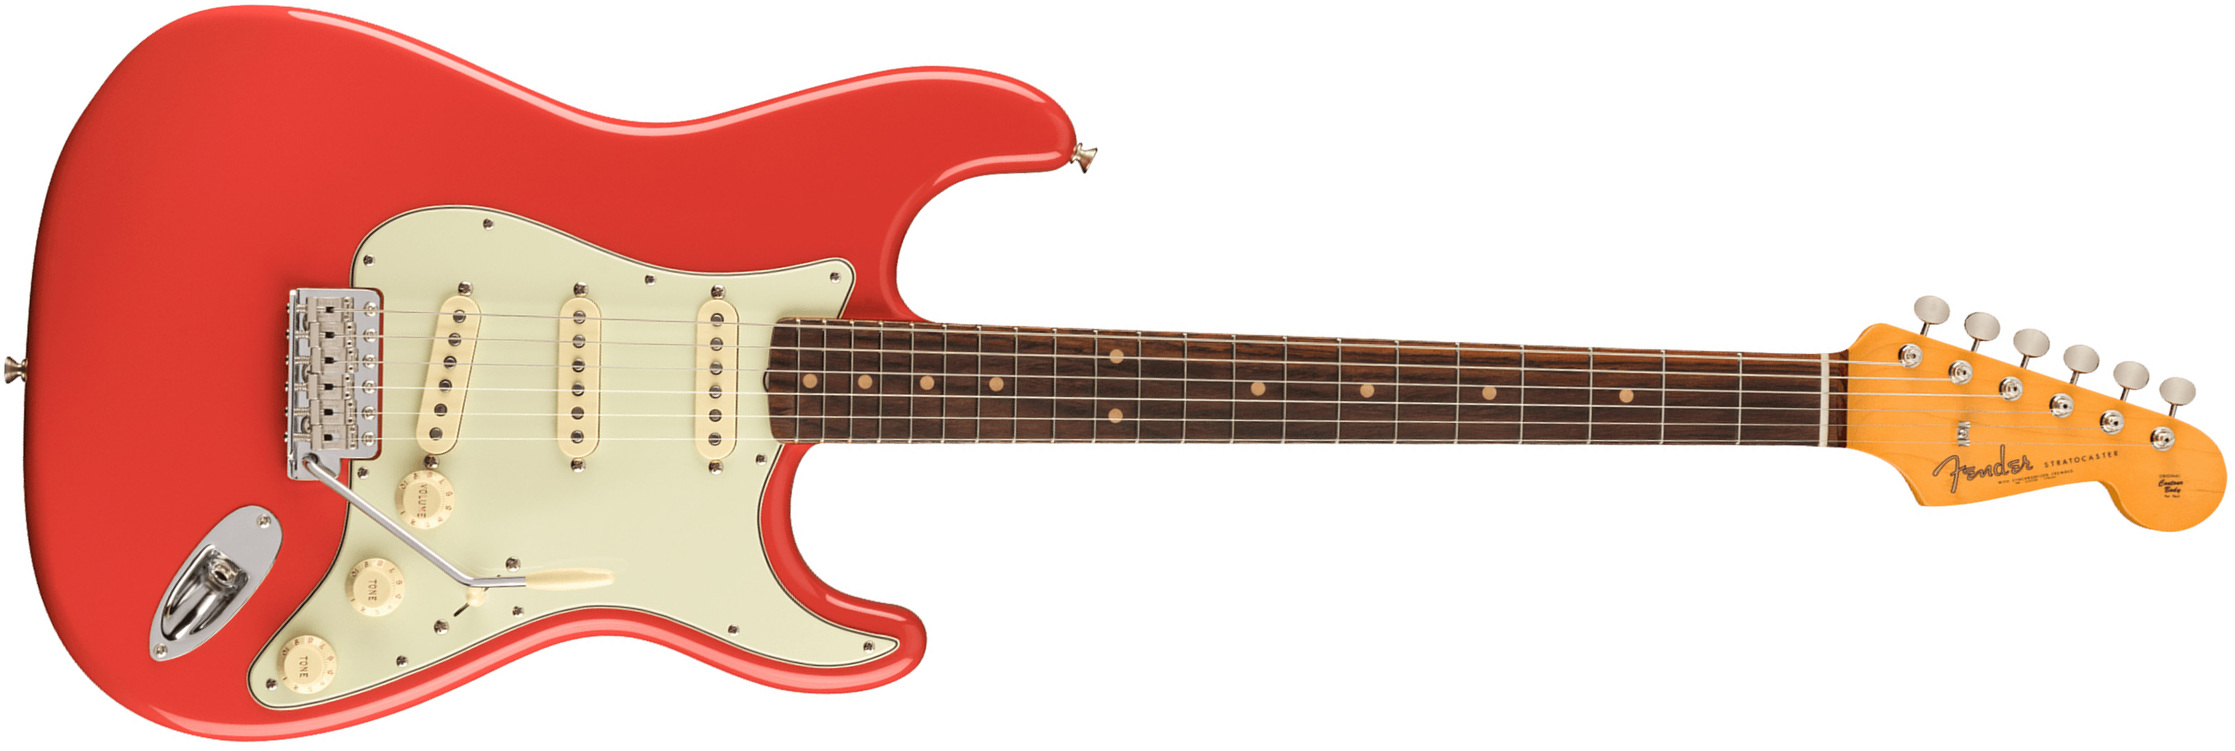 Fender Strat 1961 American Vintage Ii Usa 3s Trem Rw - Fiesta Red - Guitare Électrique Forme Str - Main picture